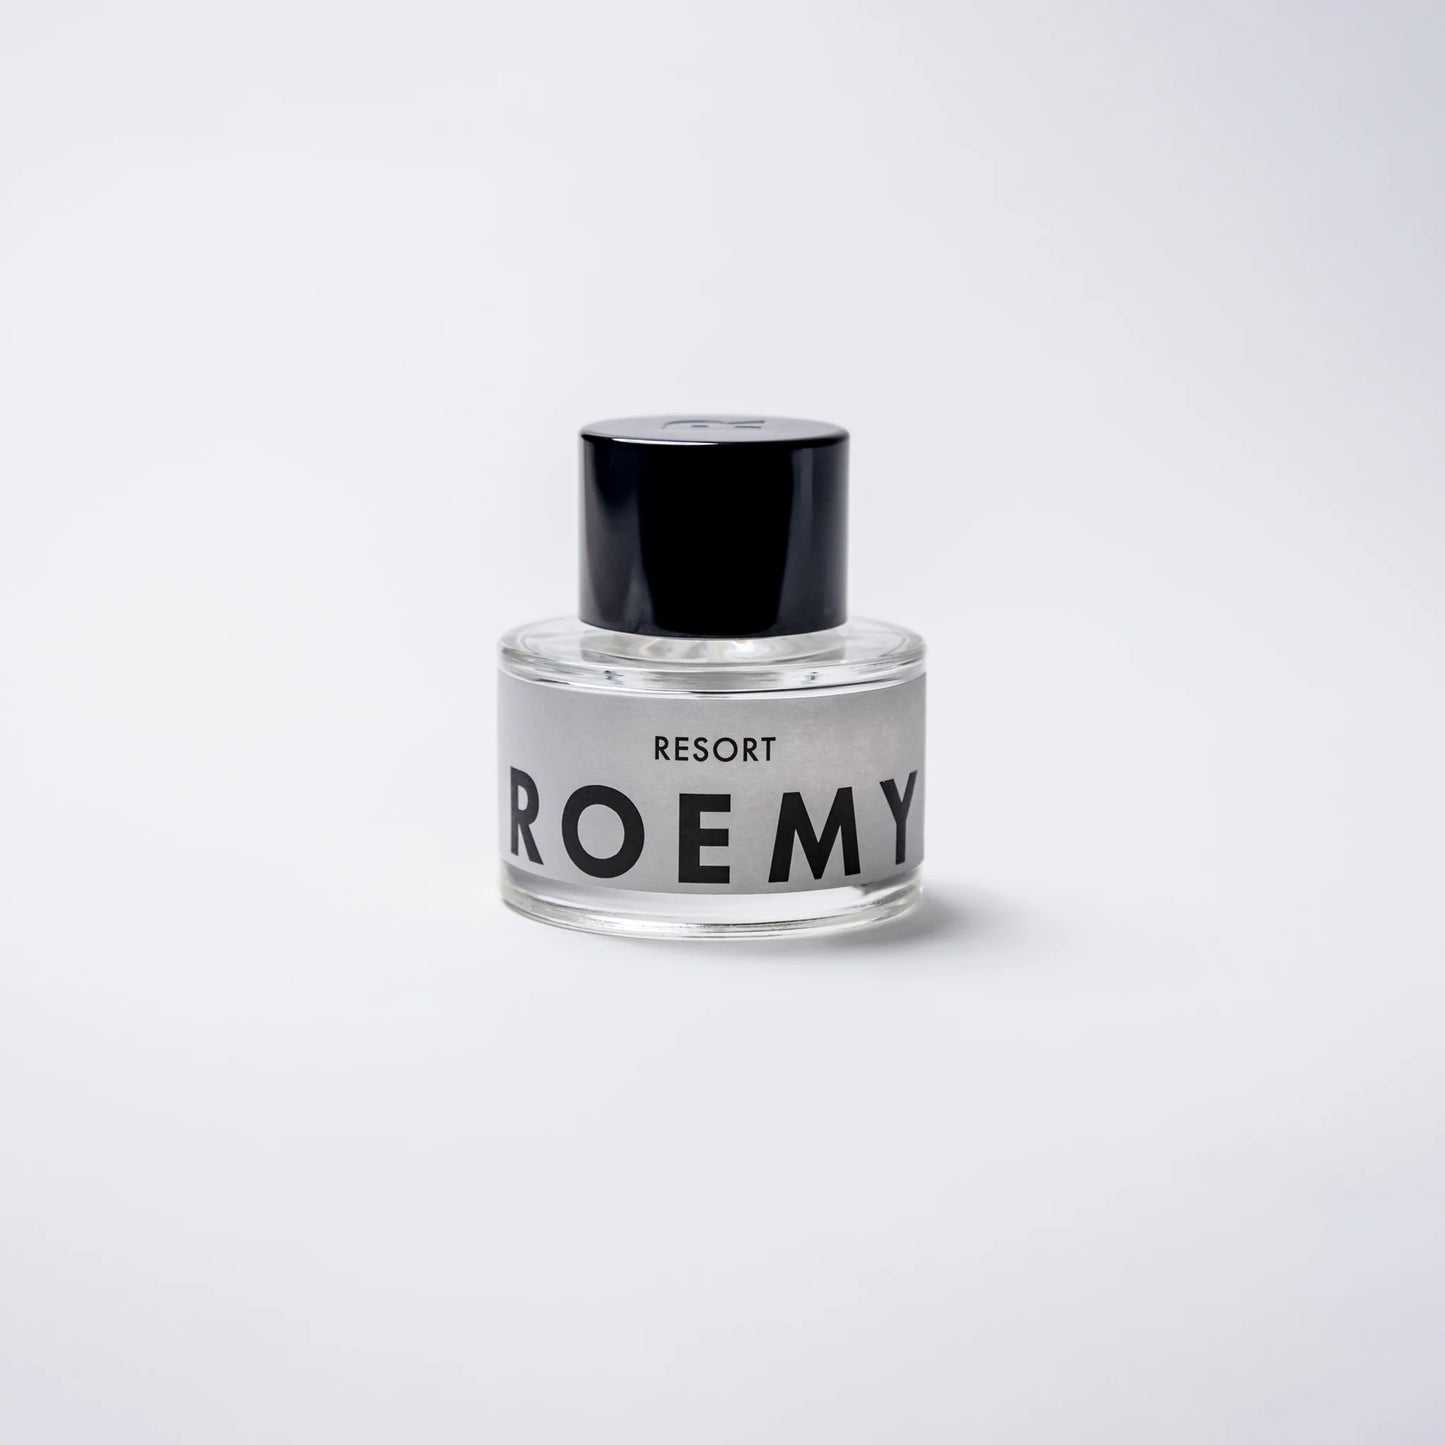 ROEMY RESORT PERFUME - 55ML